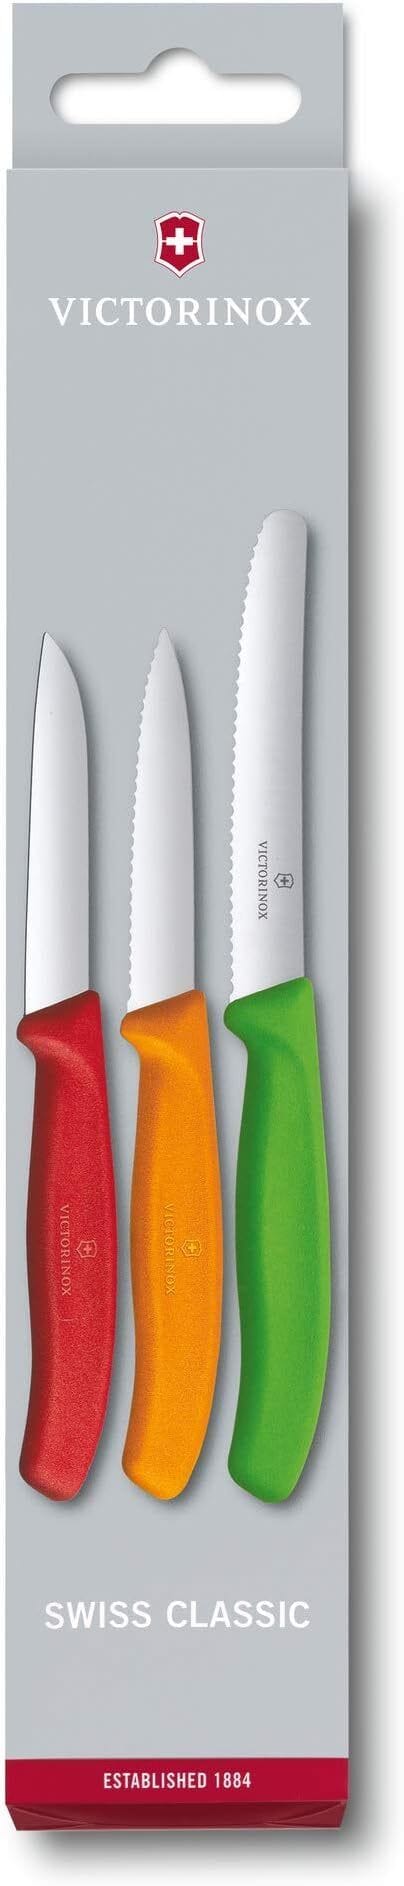 Victorinox Paring Knife Set - 3pc Colours